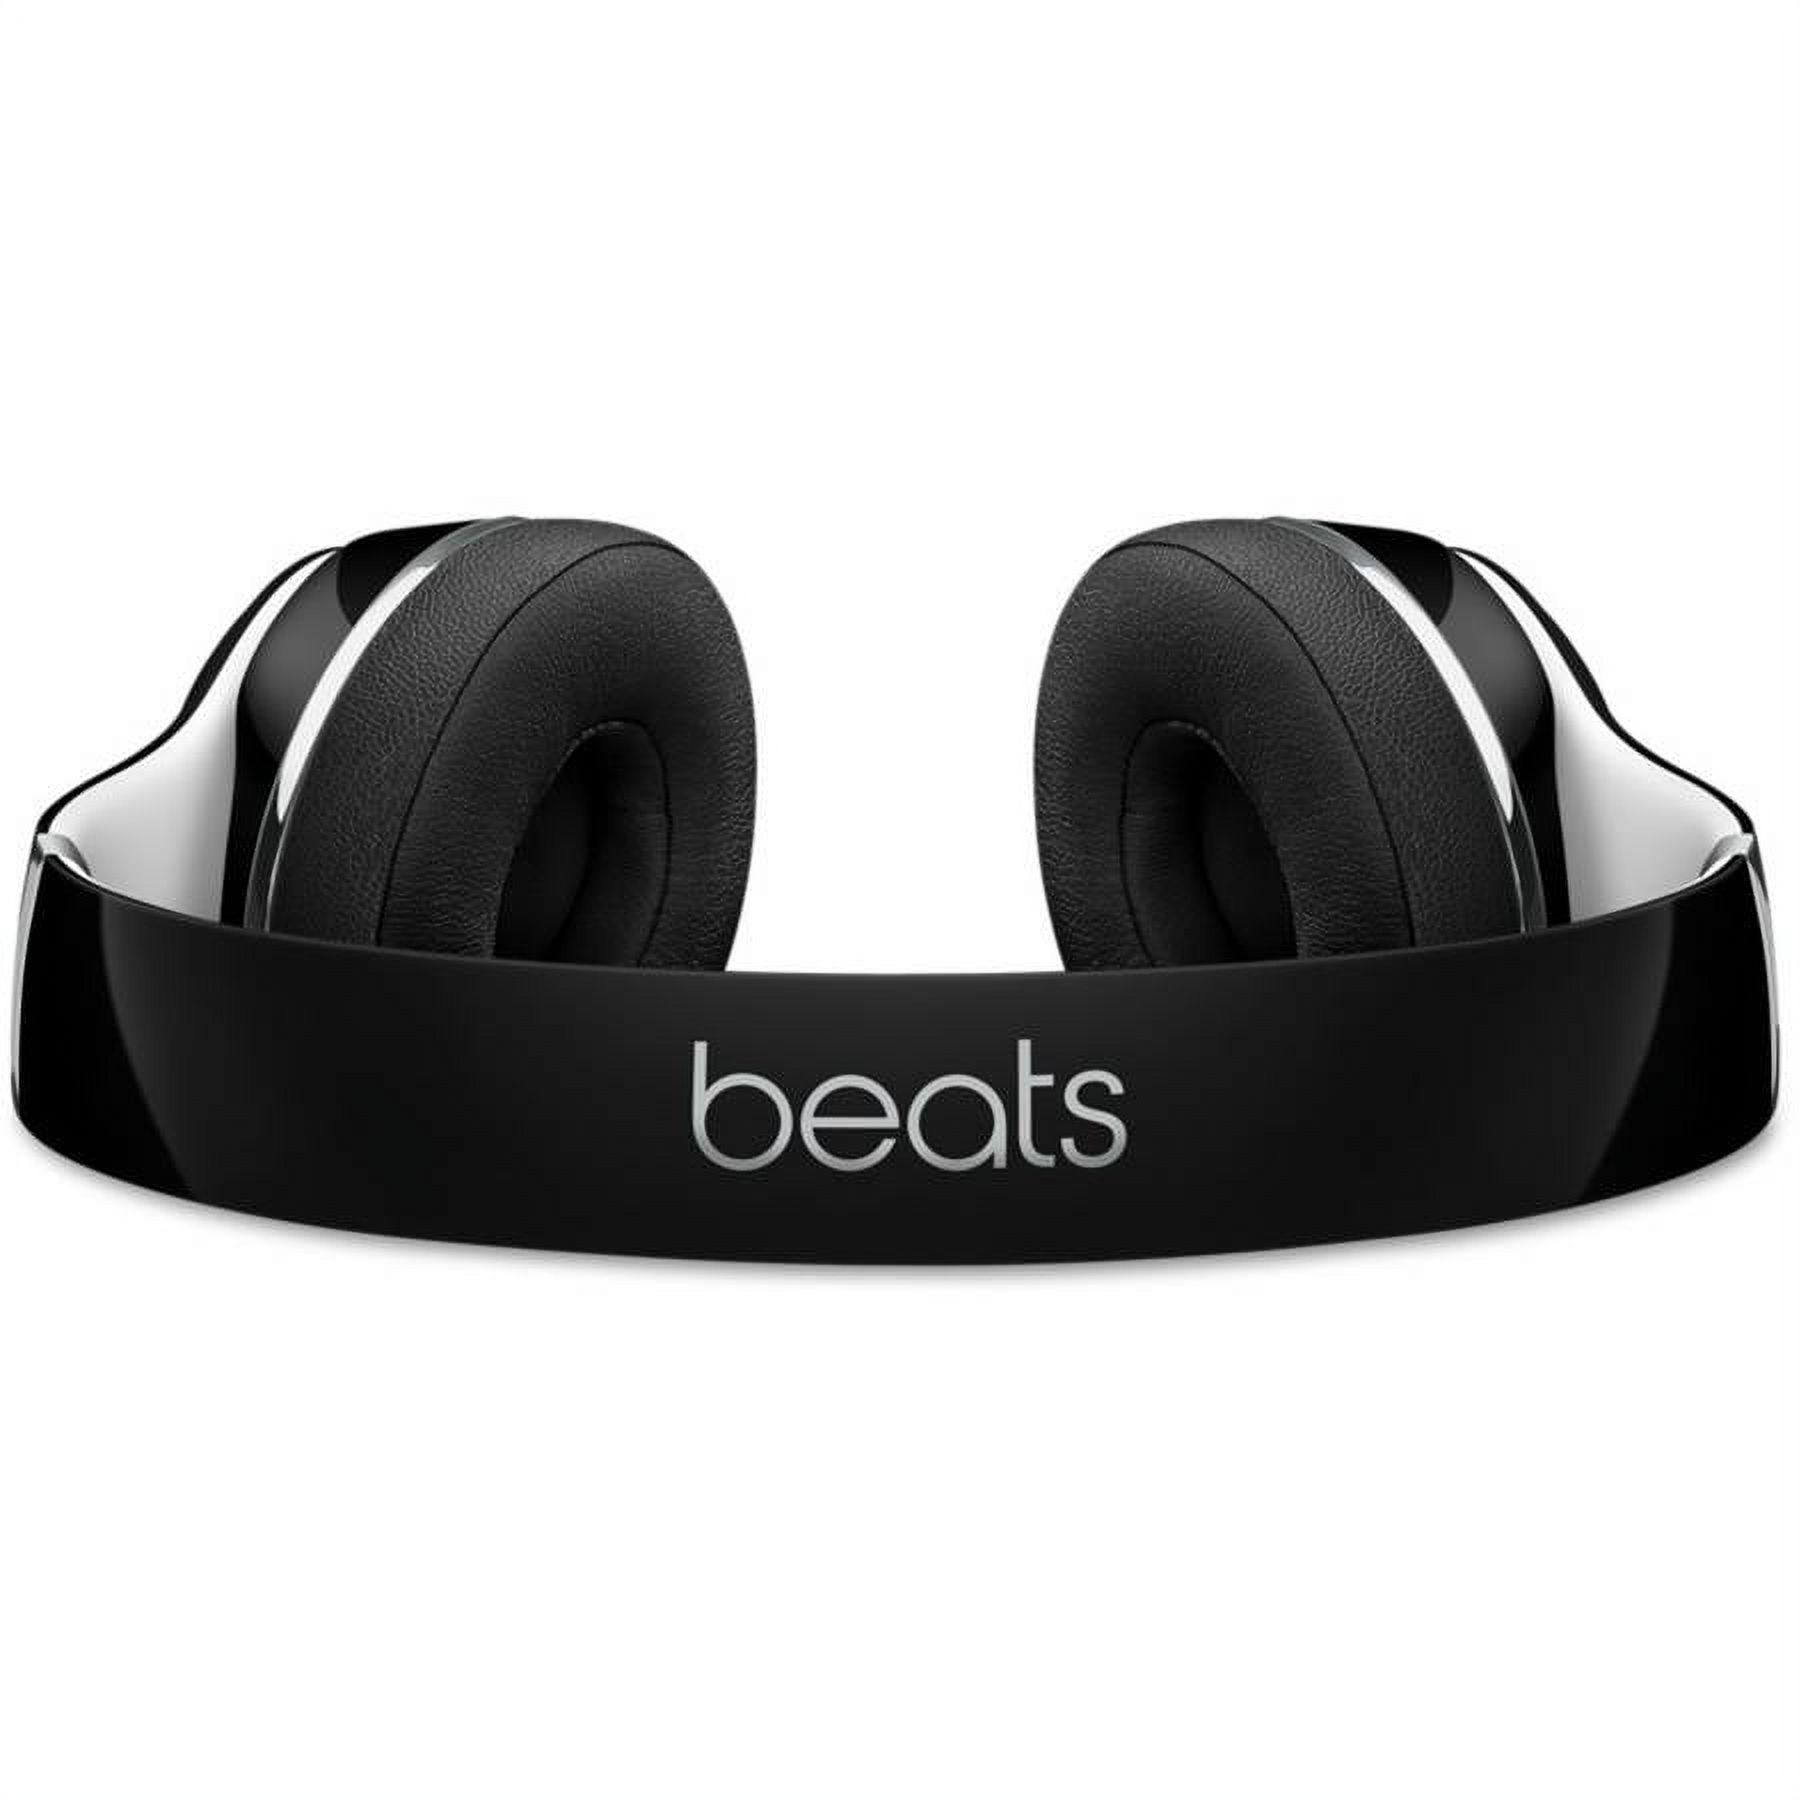 Beats by Dr. Dre Noise-Canceling Over-Ear Headphones, Black, ML9E2AM/A - image 3 of 7